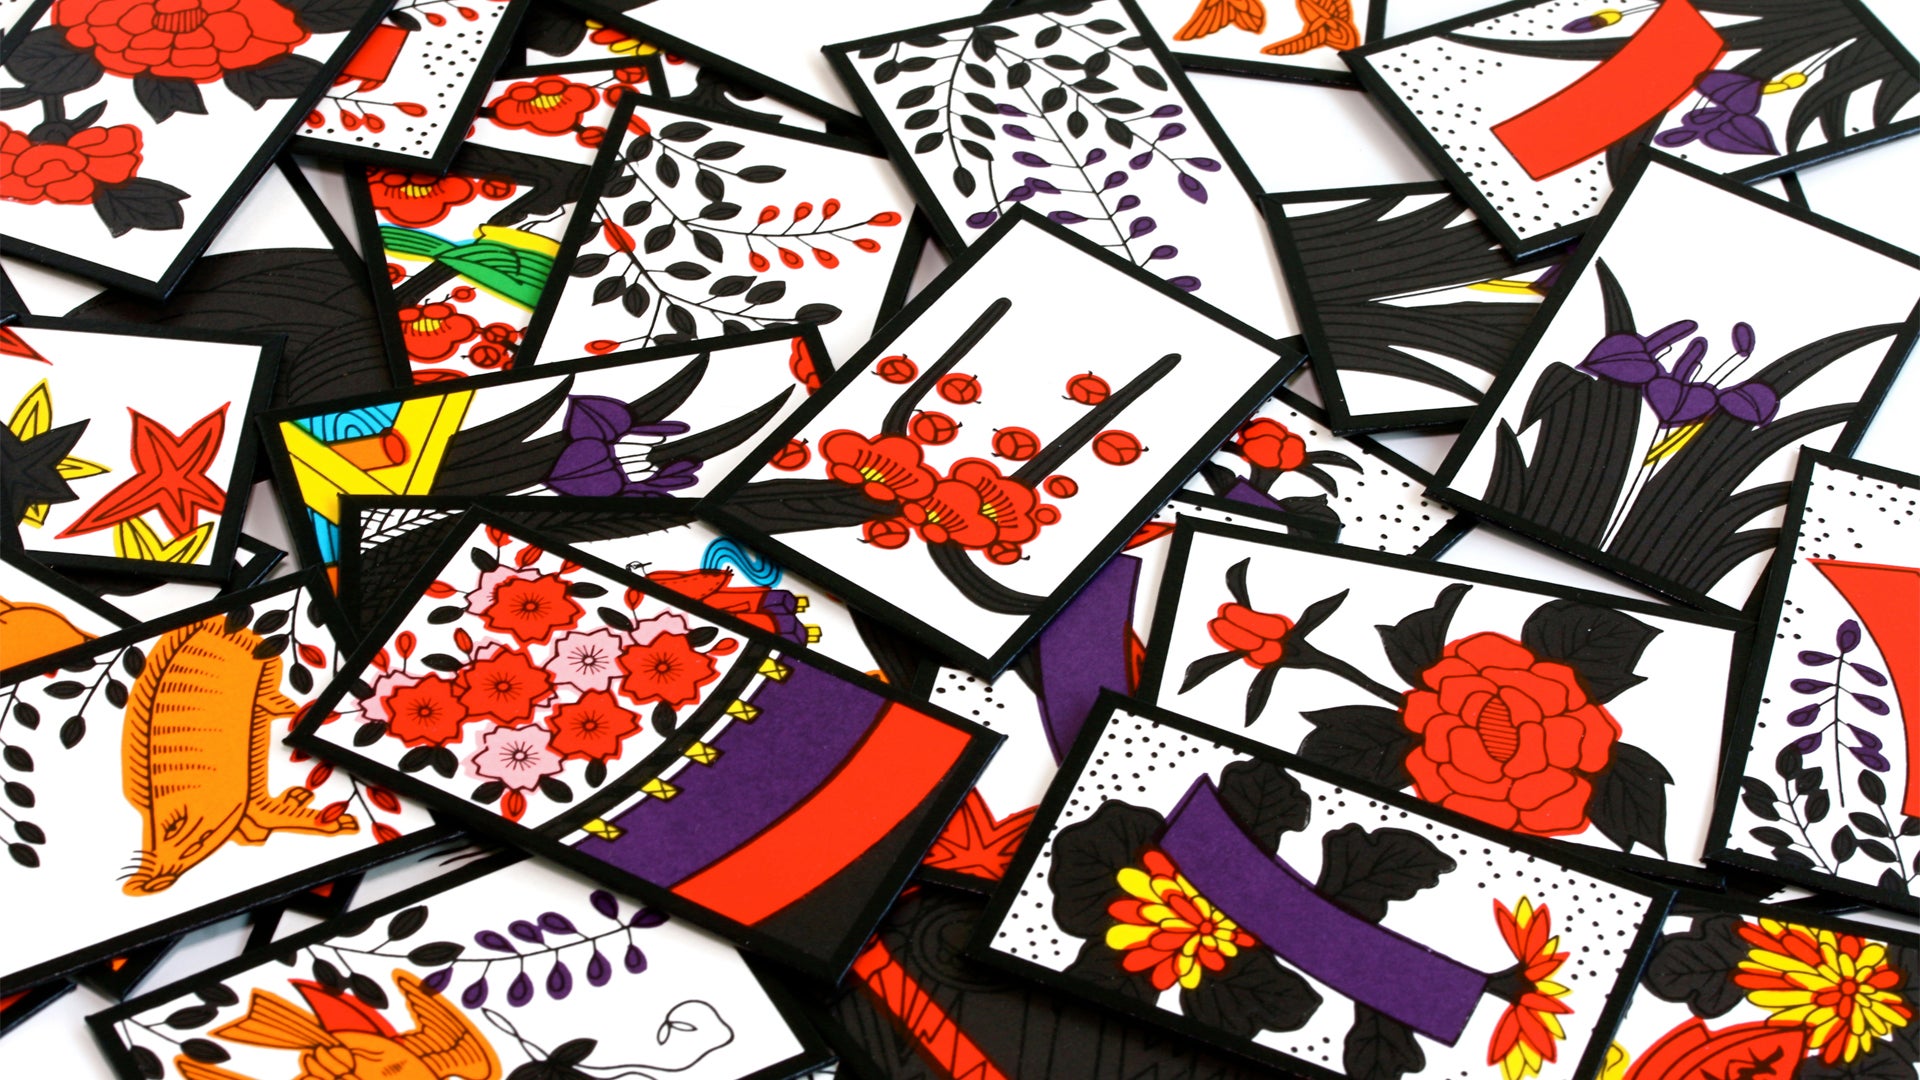 A pile of Hanafuda cards